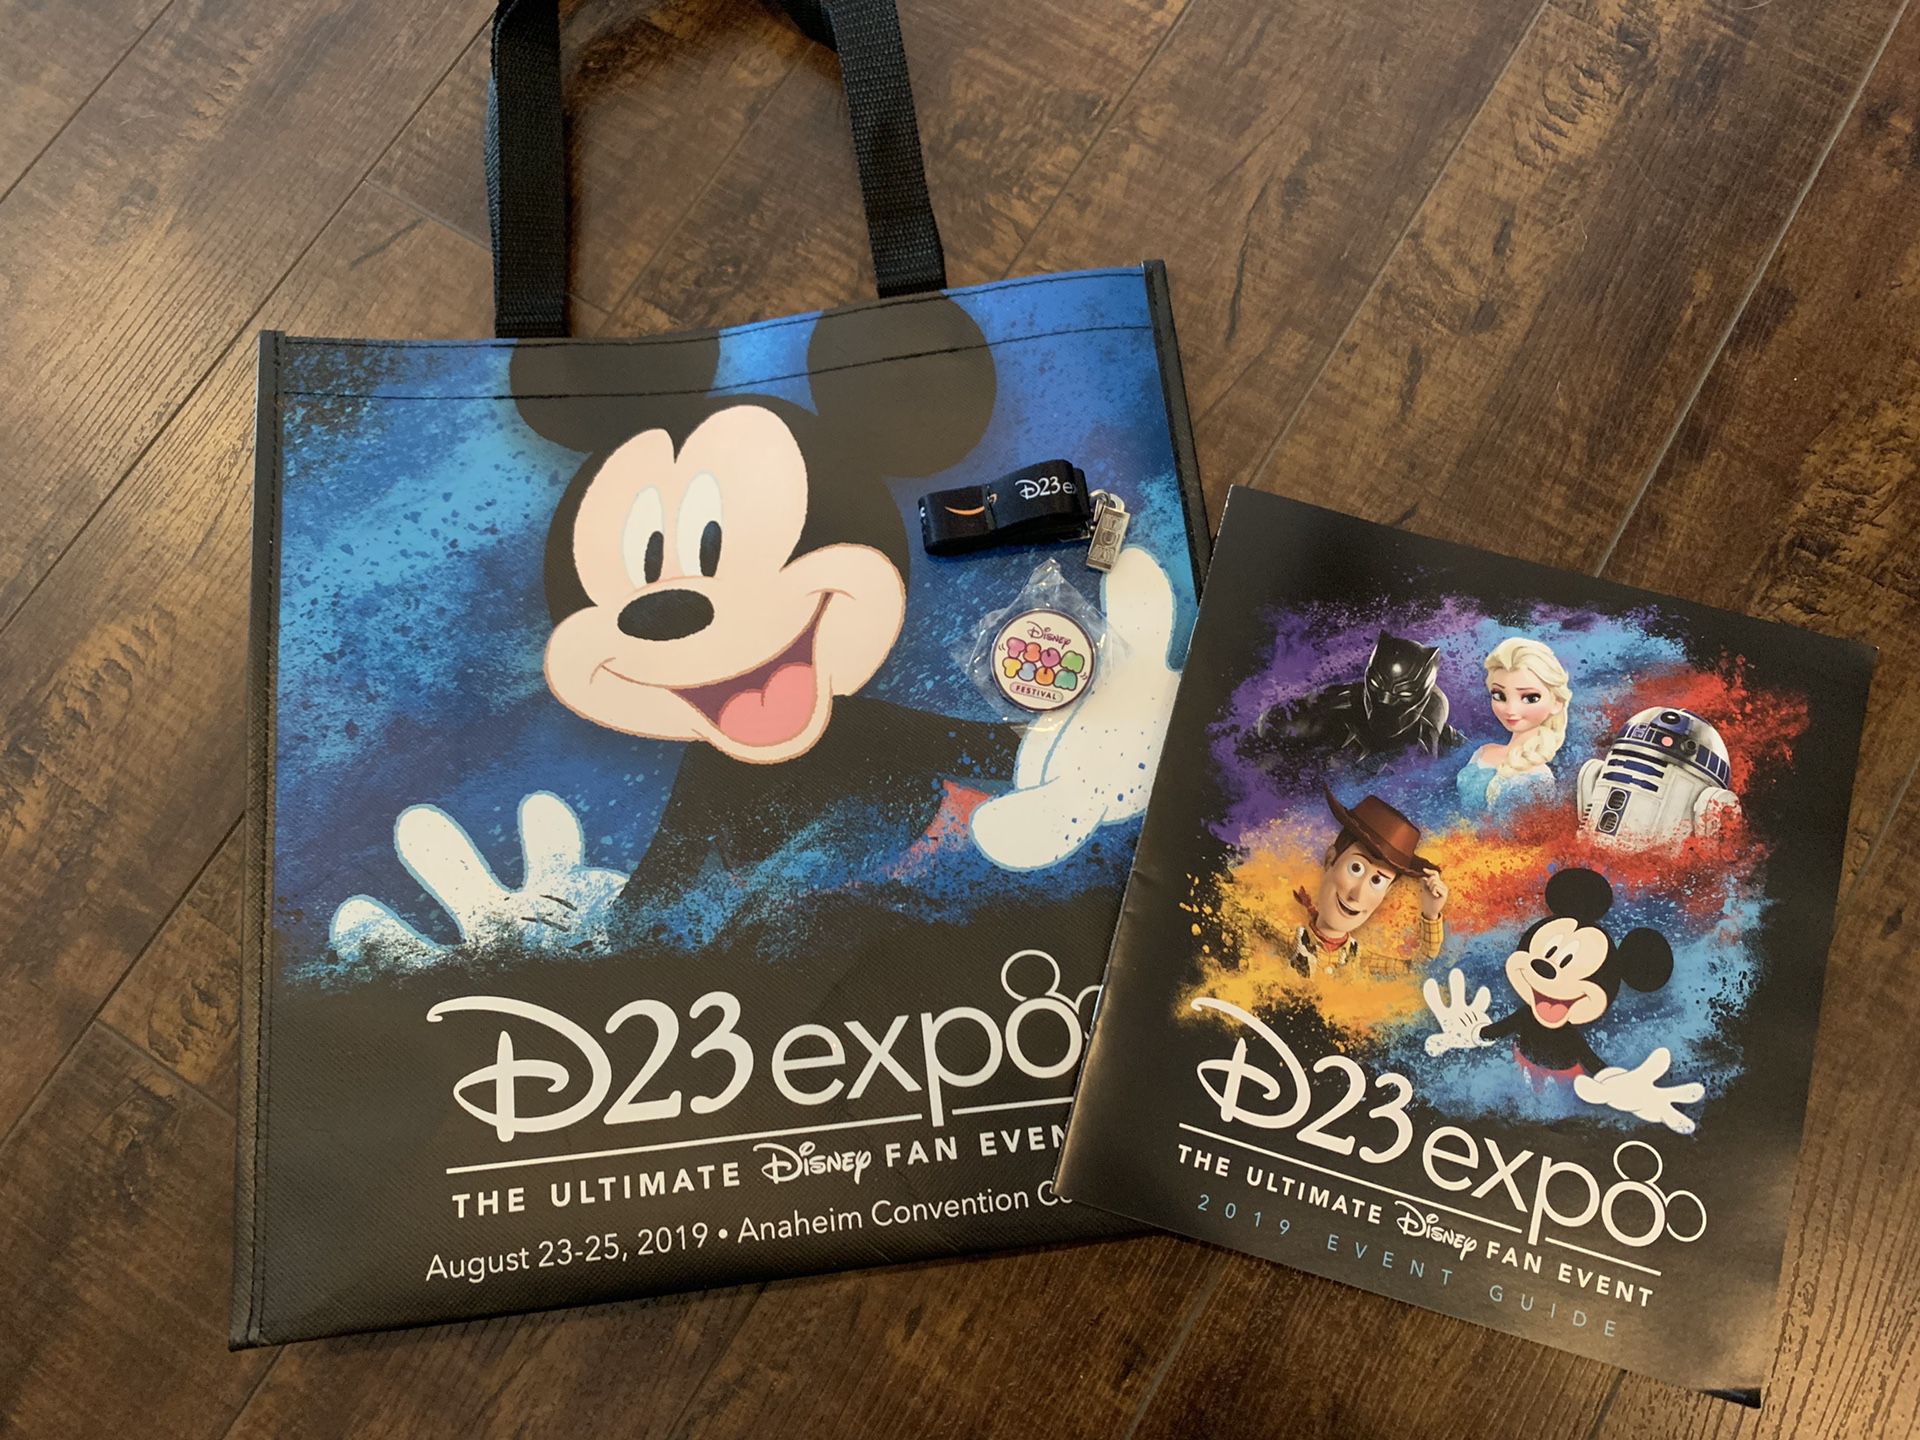 Disney D23 Expo 2019 Bag, Guide, Lanyard, Pin